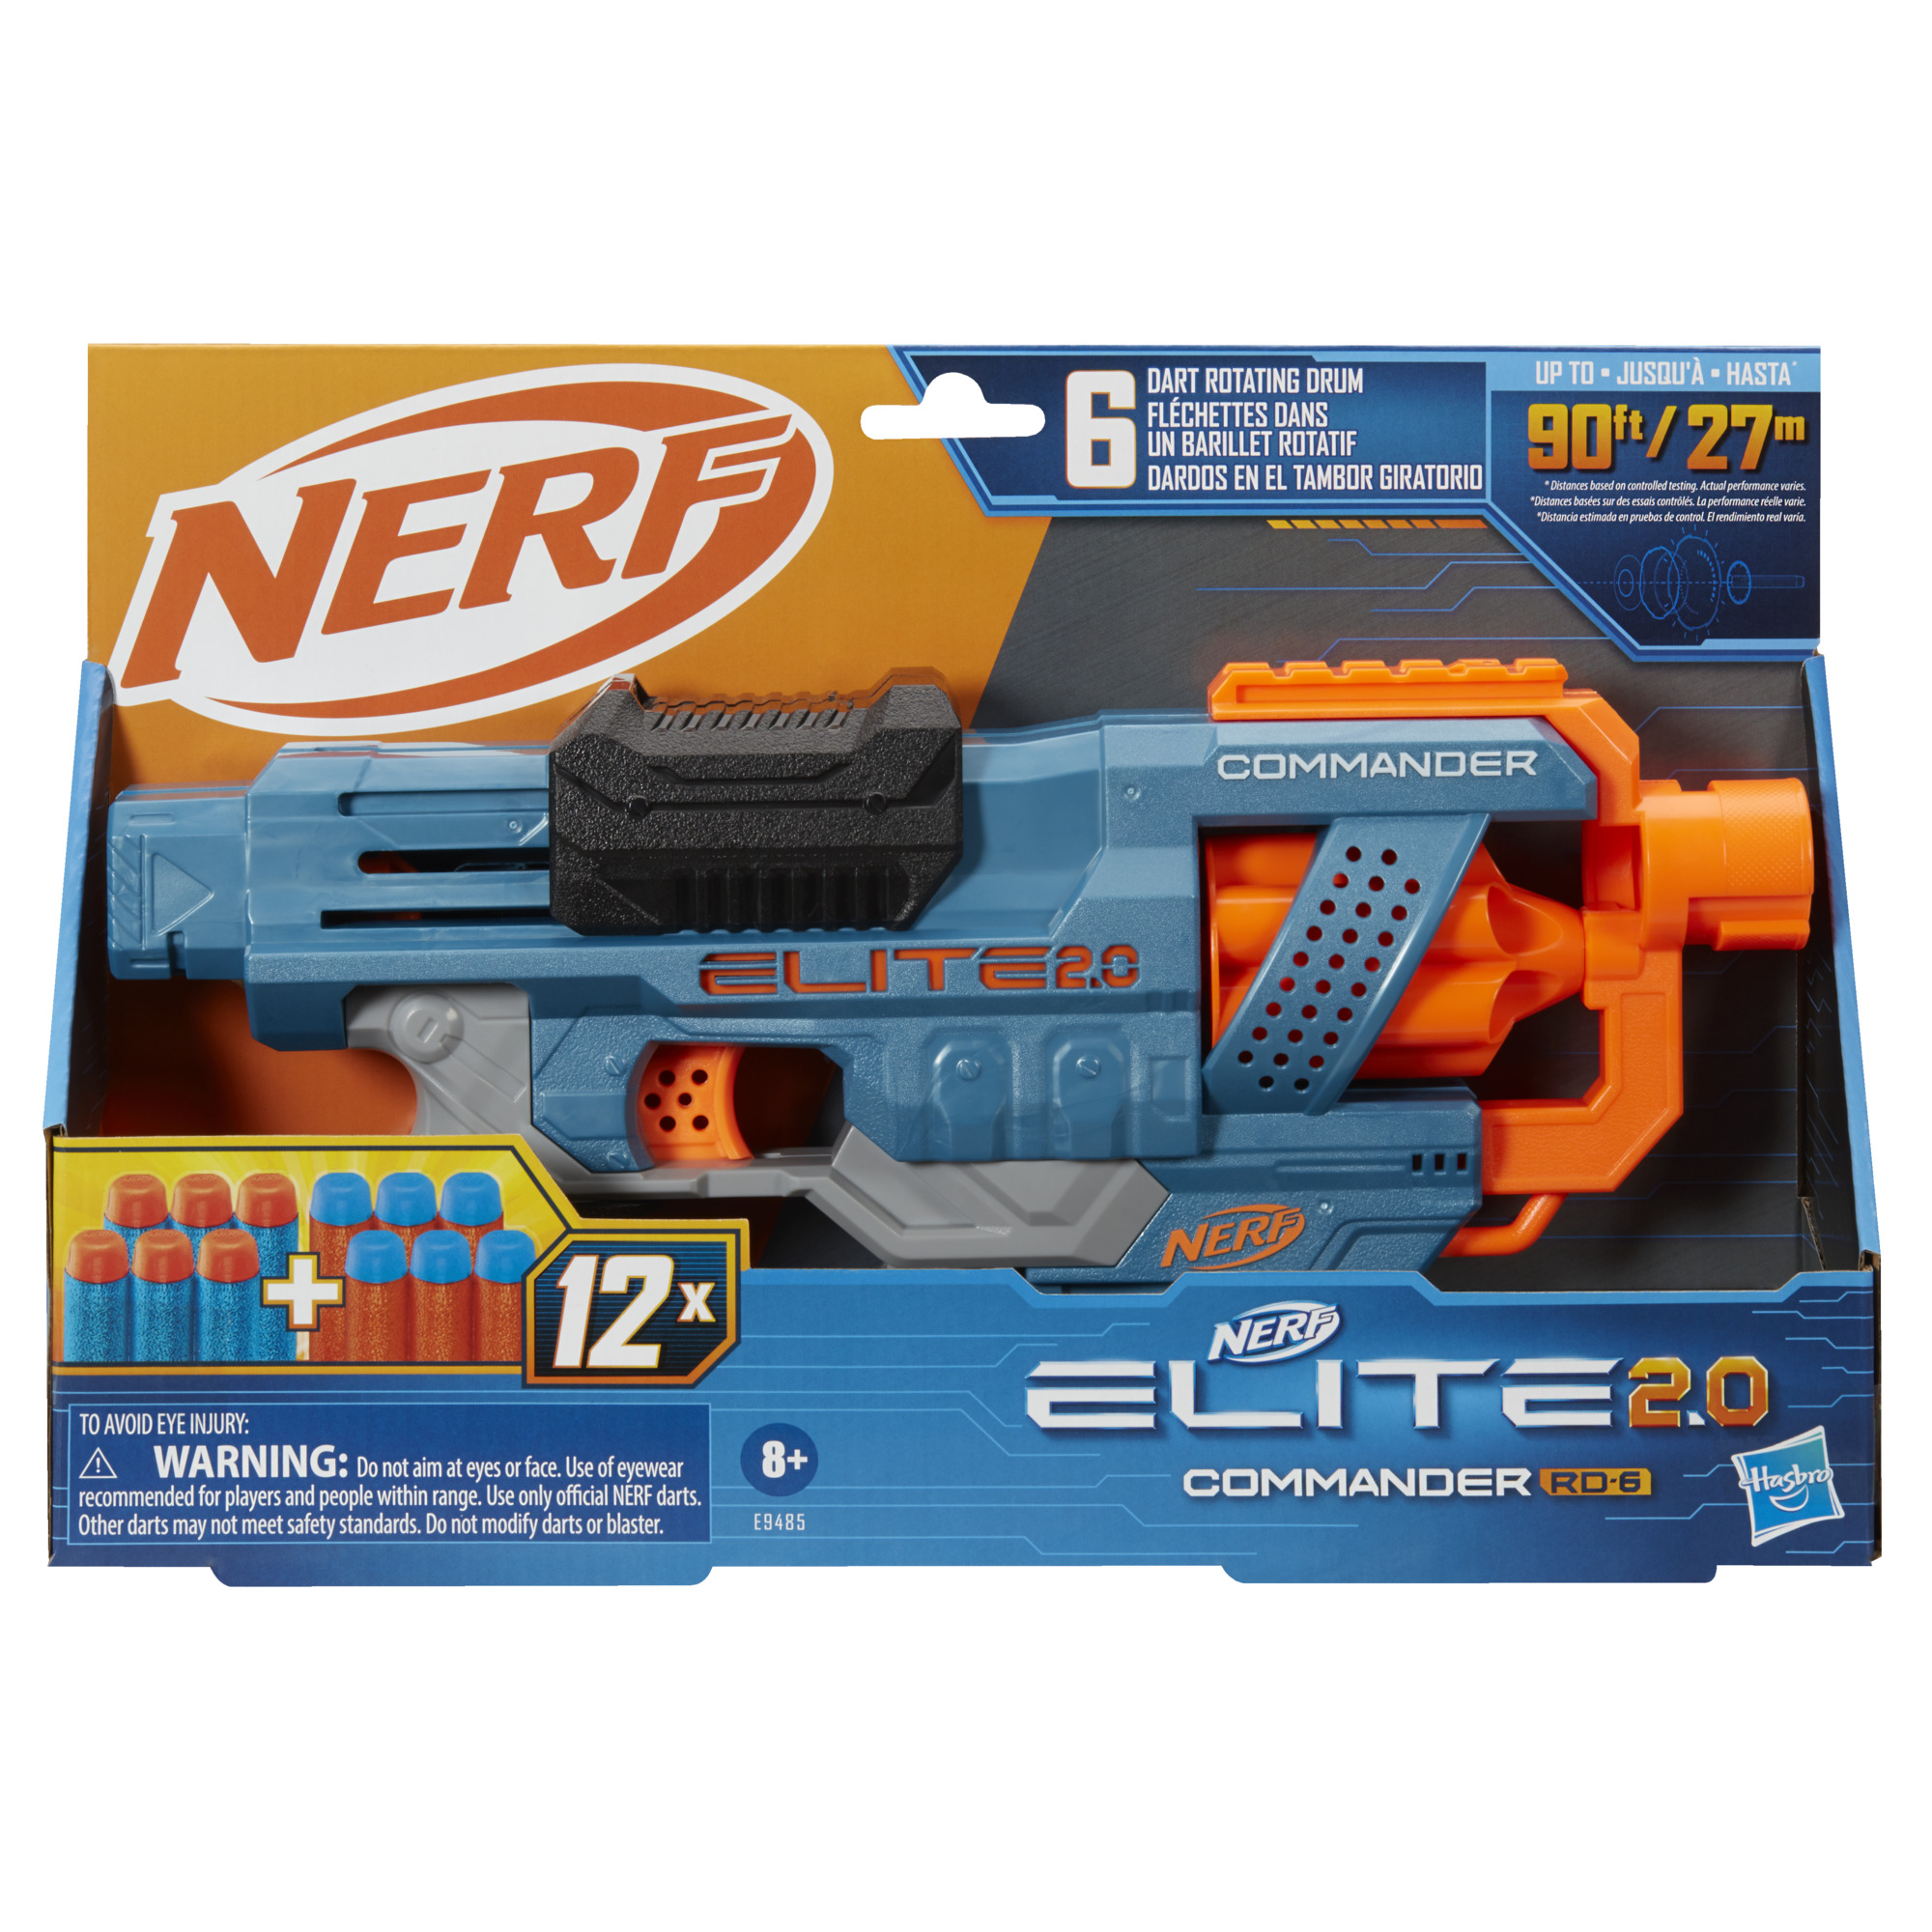 Nerf Elite 2.0 Commander RD-6 Blaster, 12 Official Nerf Darts, 6-Dart Rotating Drum, Built-In Customizing Capabilities - image 4 of 9